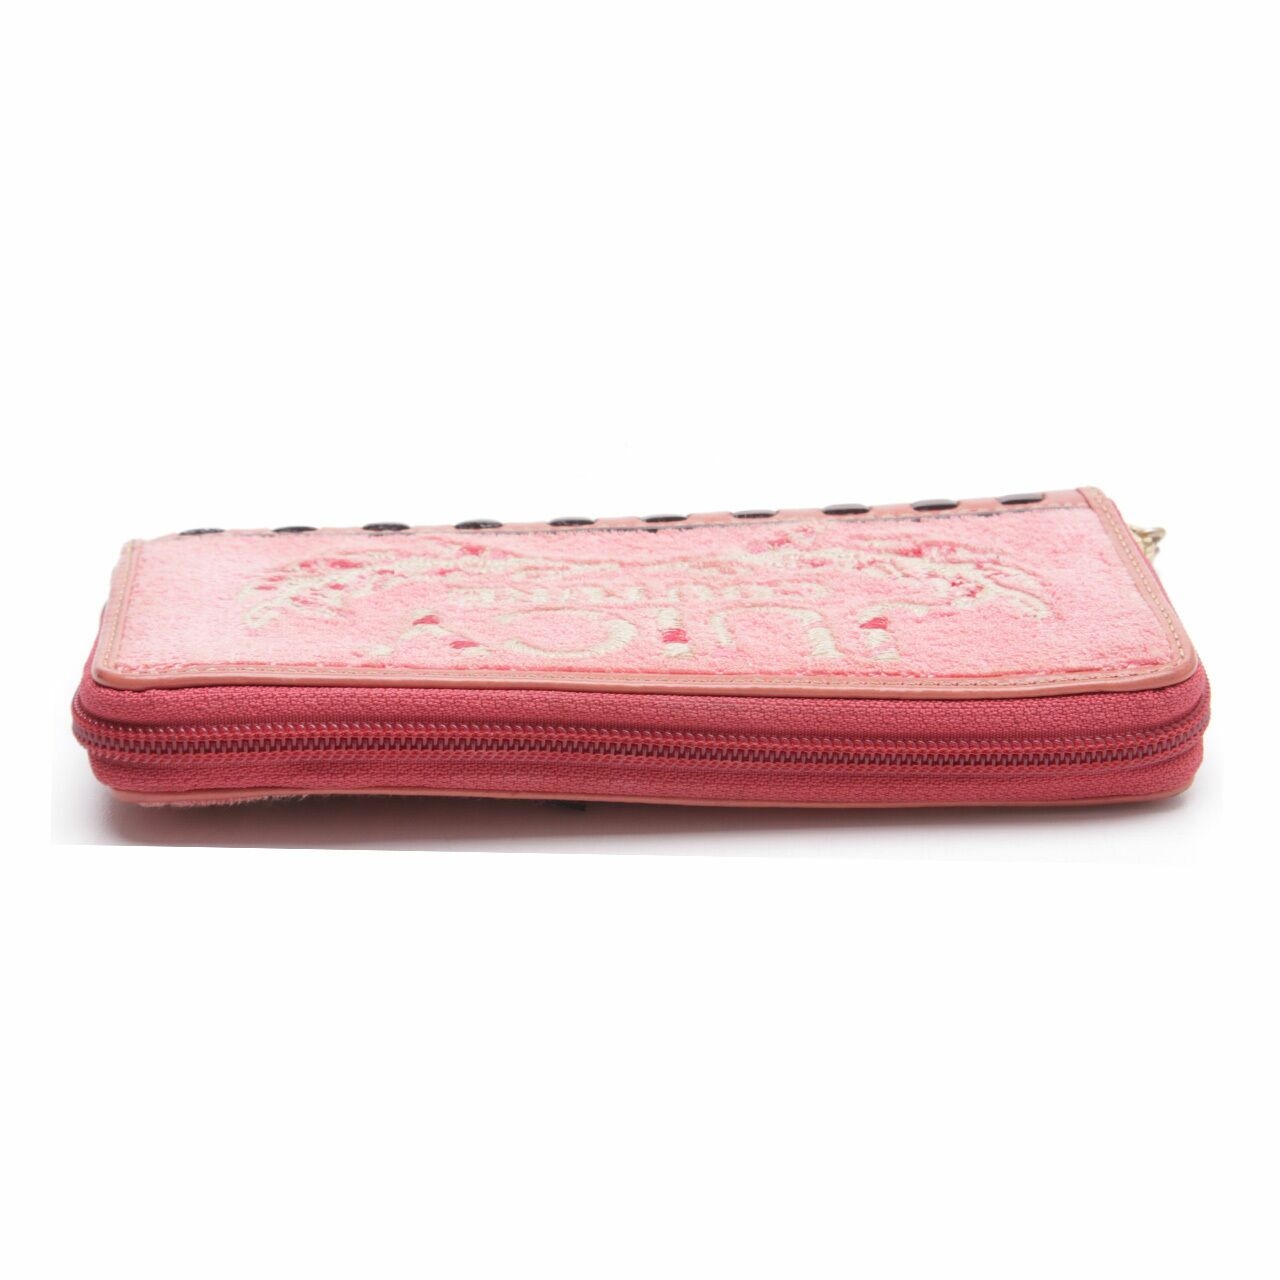 Juicy Couture Pink Wallet